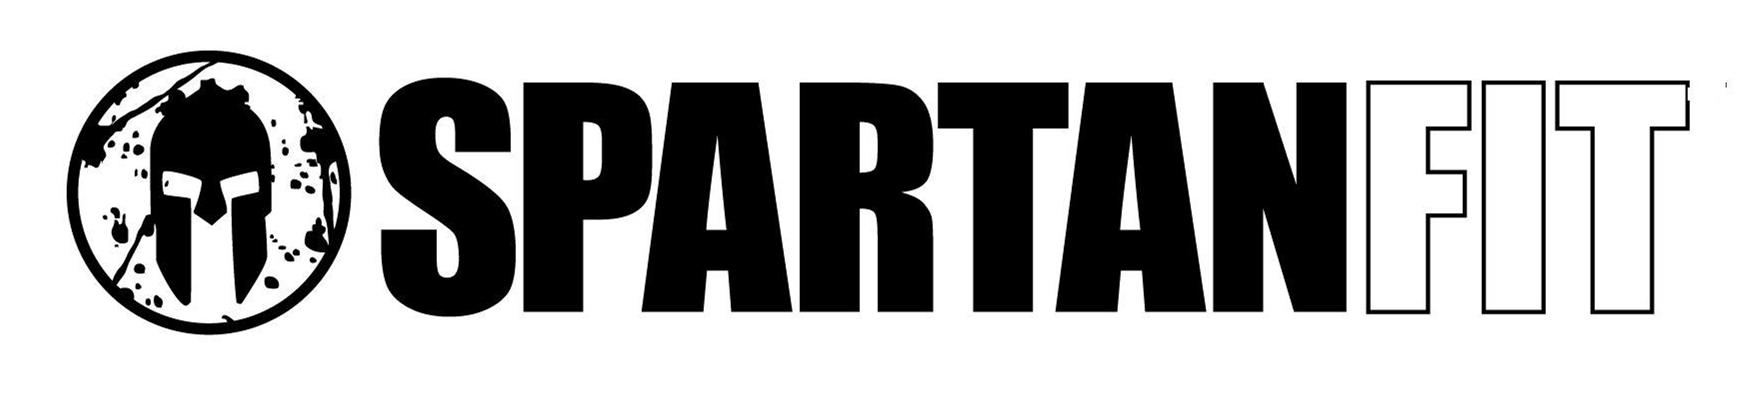 Trademark Logo SPARTANFIT